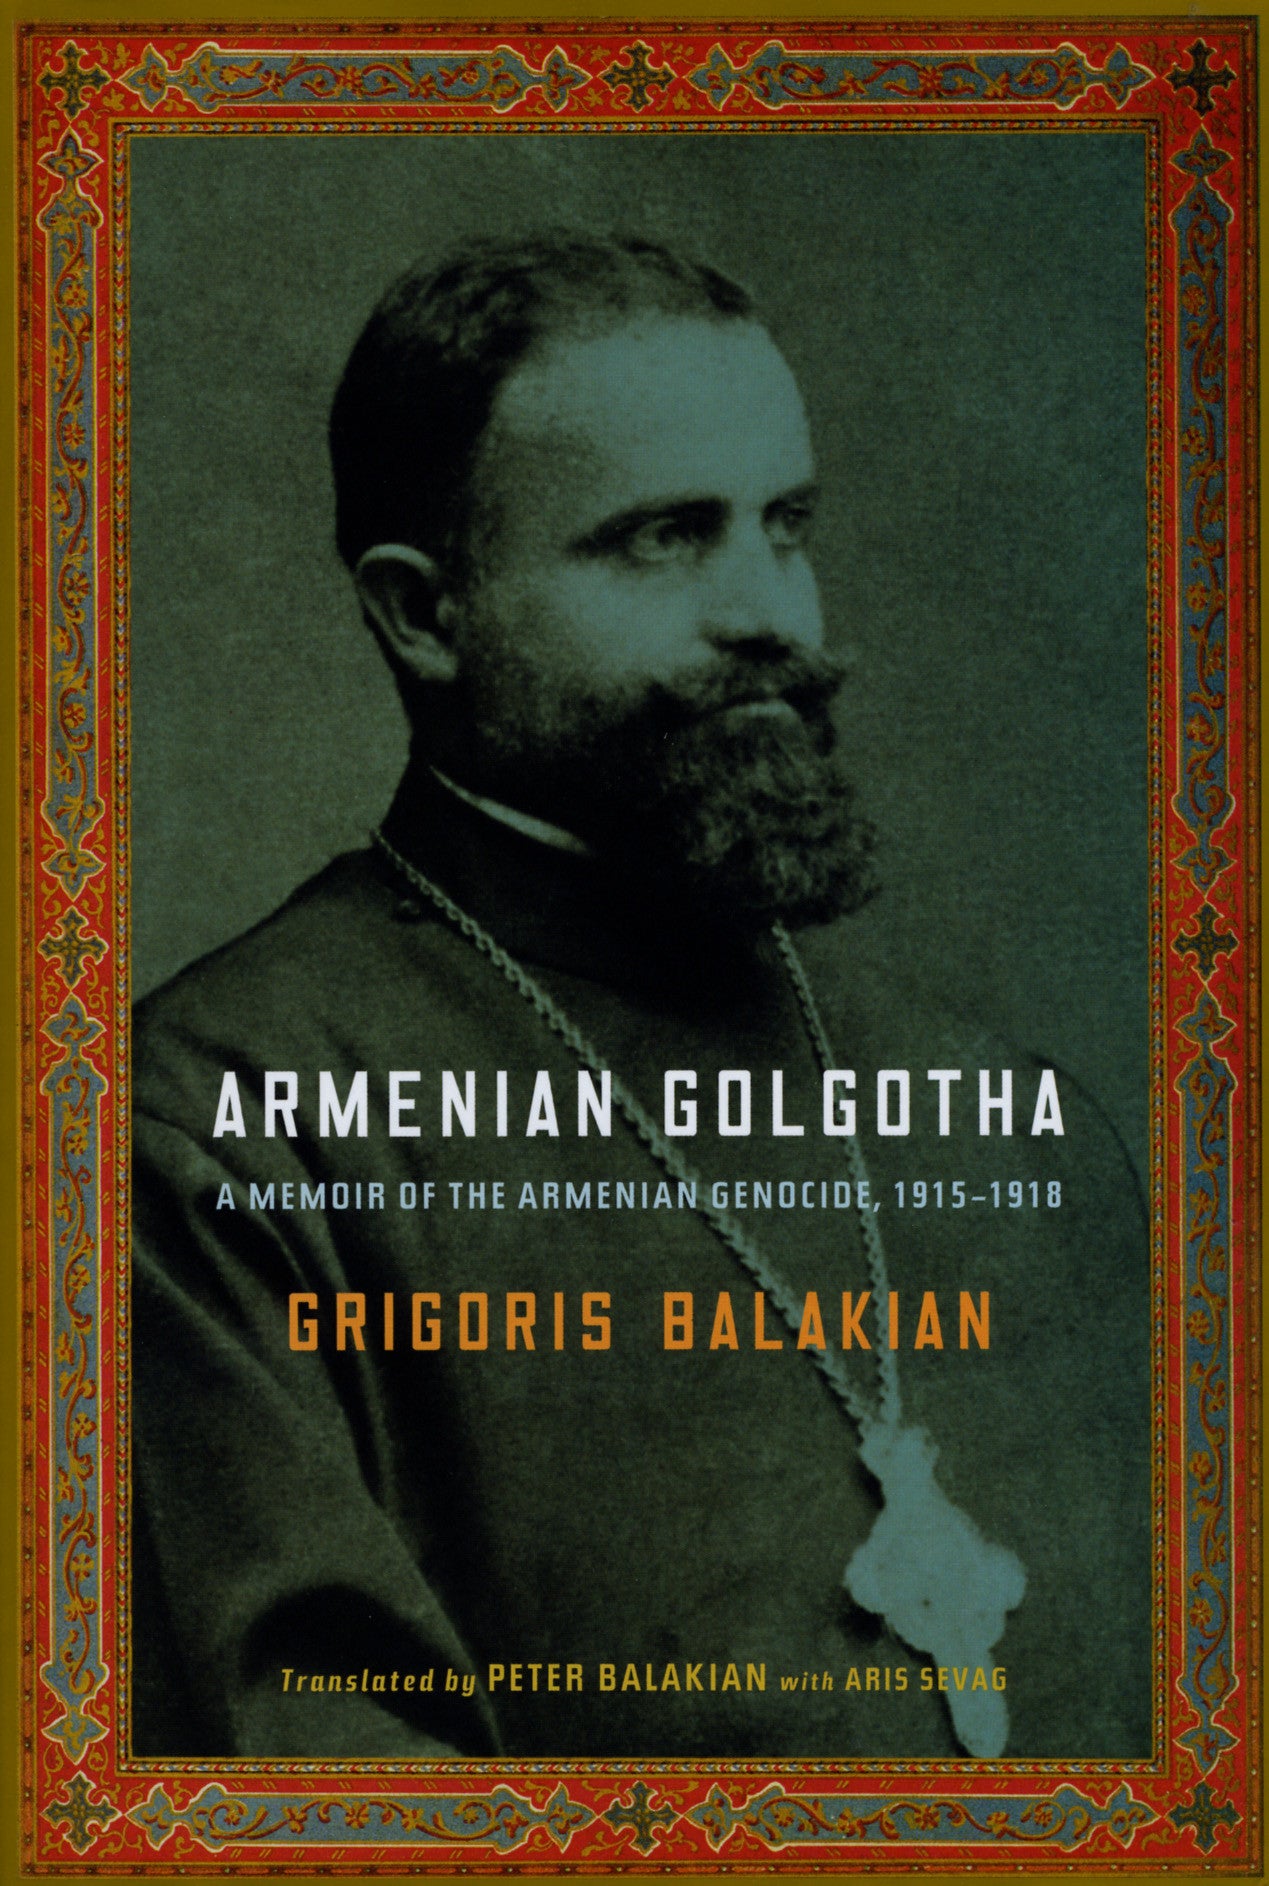 ARMENIAN GOLGOTHA: A Memoir of the Armenian Genocide